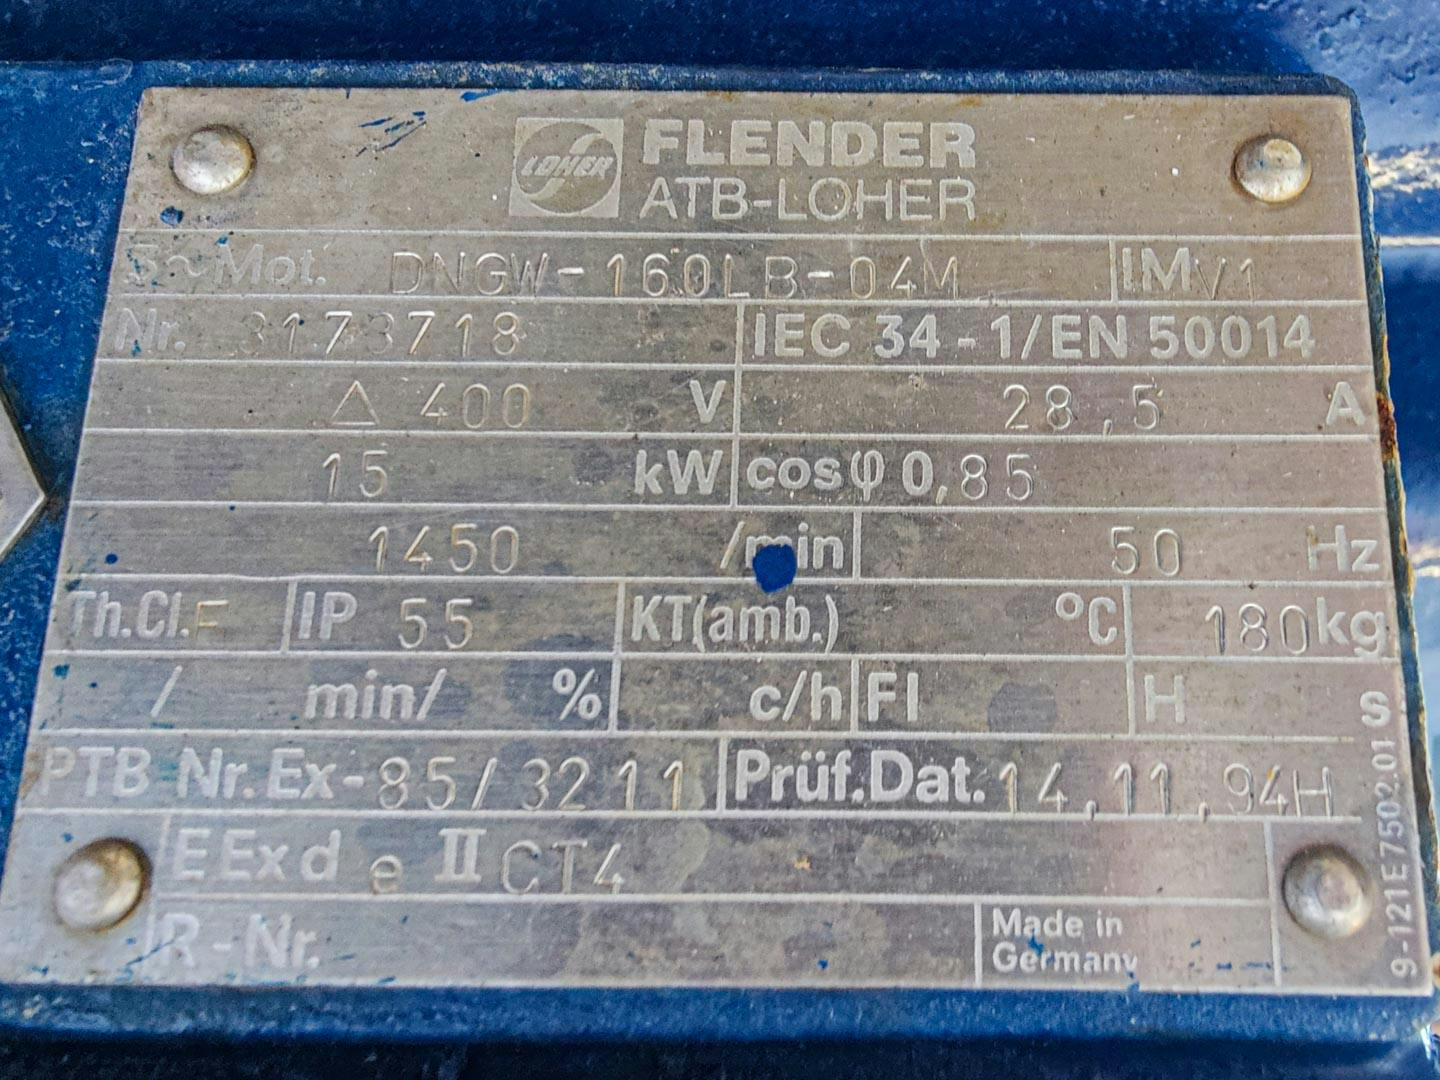 Albi Alois Binderberger 6300 Ltr - Reactor de aço inoxidável - image 13